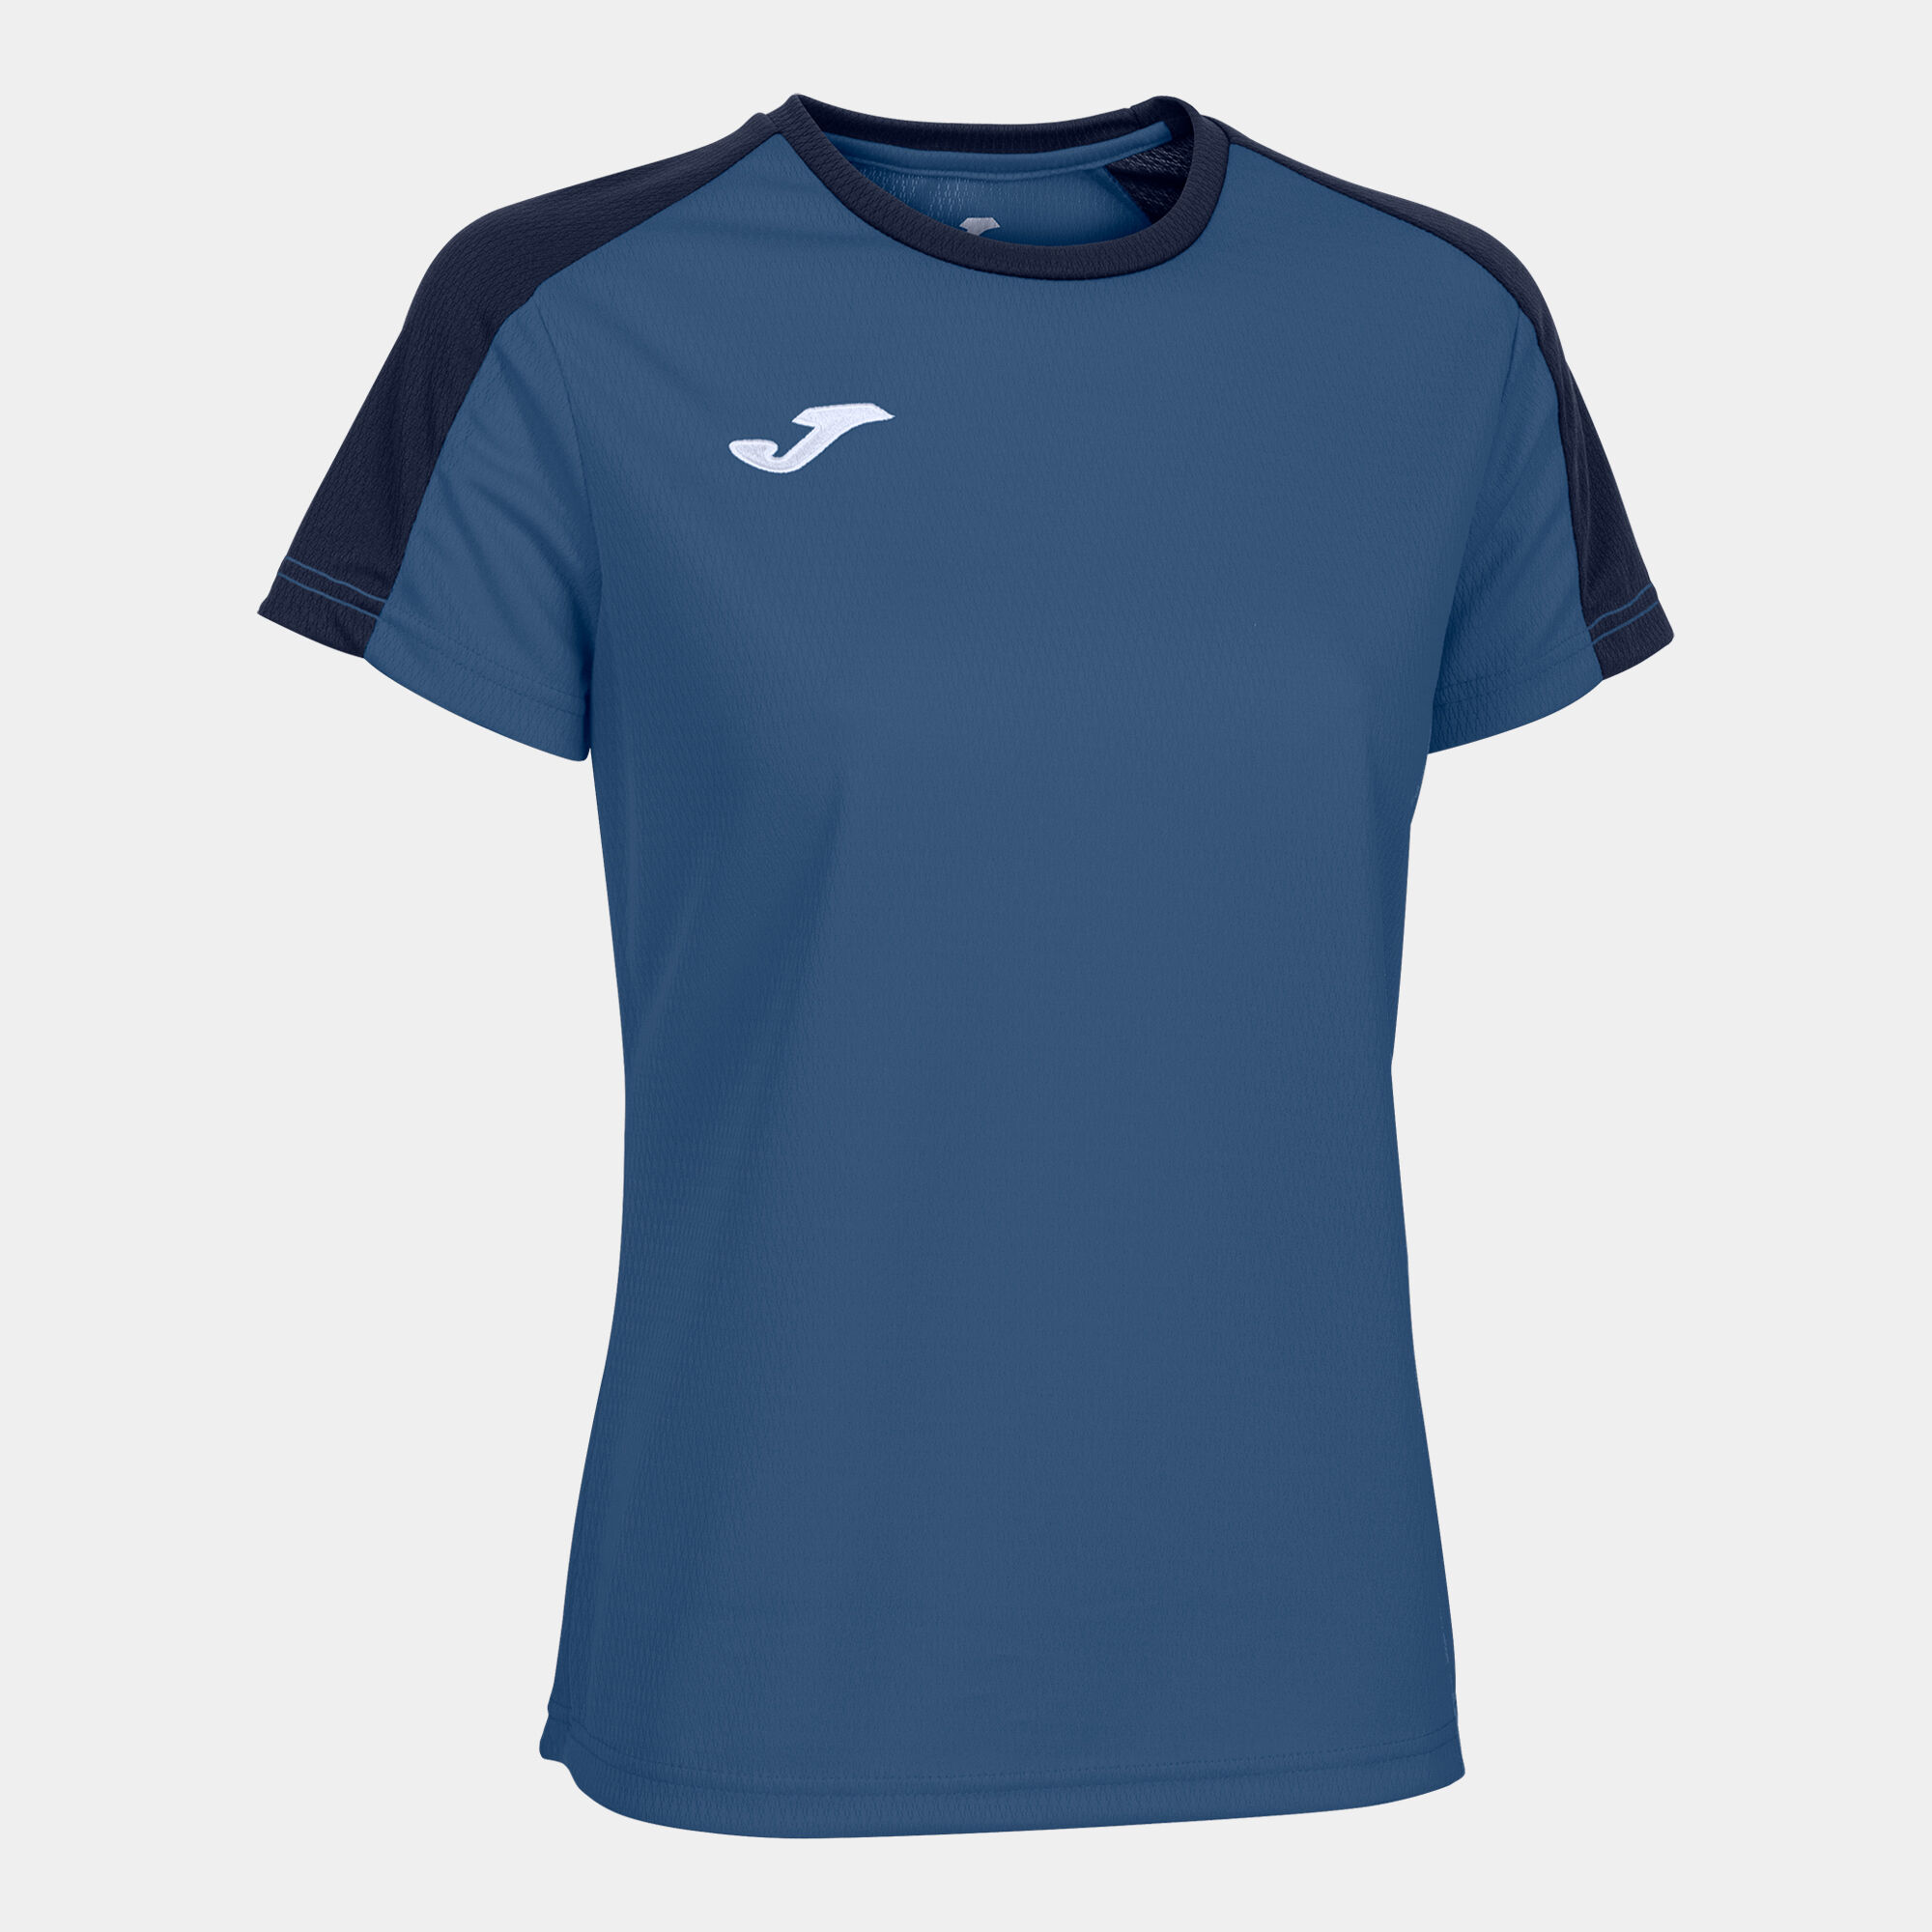 Shirt short sleeve woman Eco Championship blue navy blue